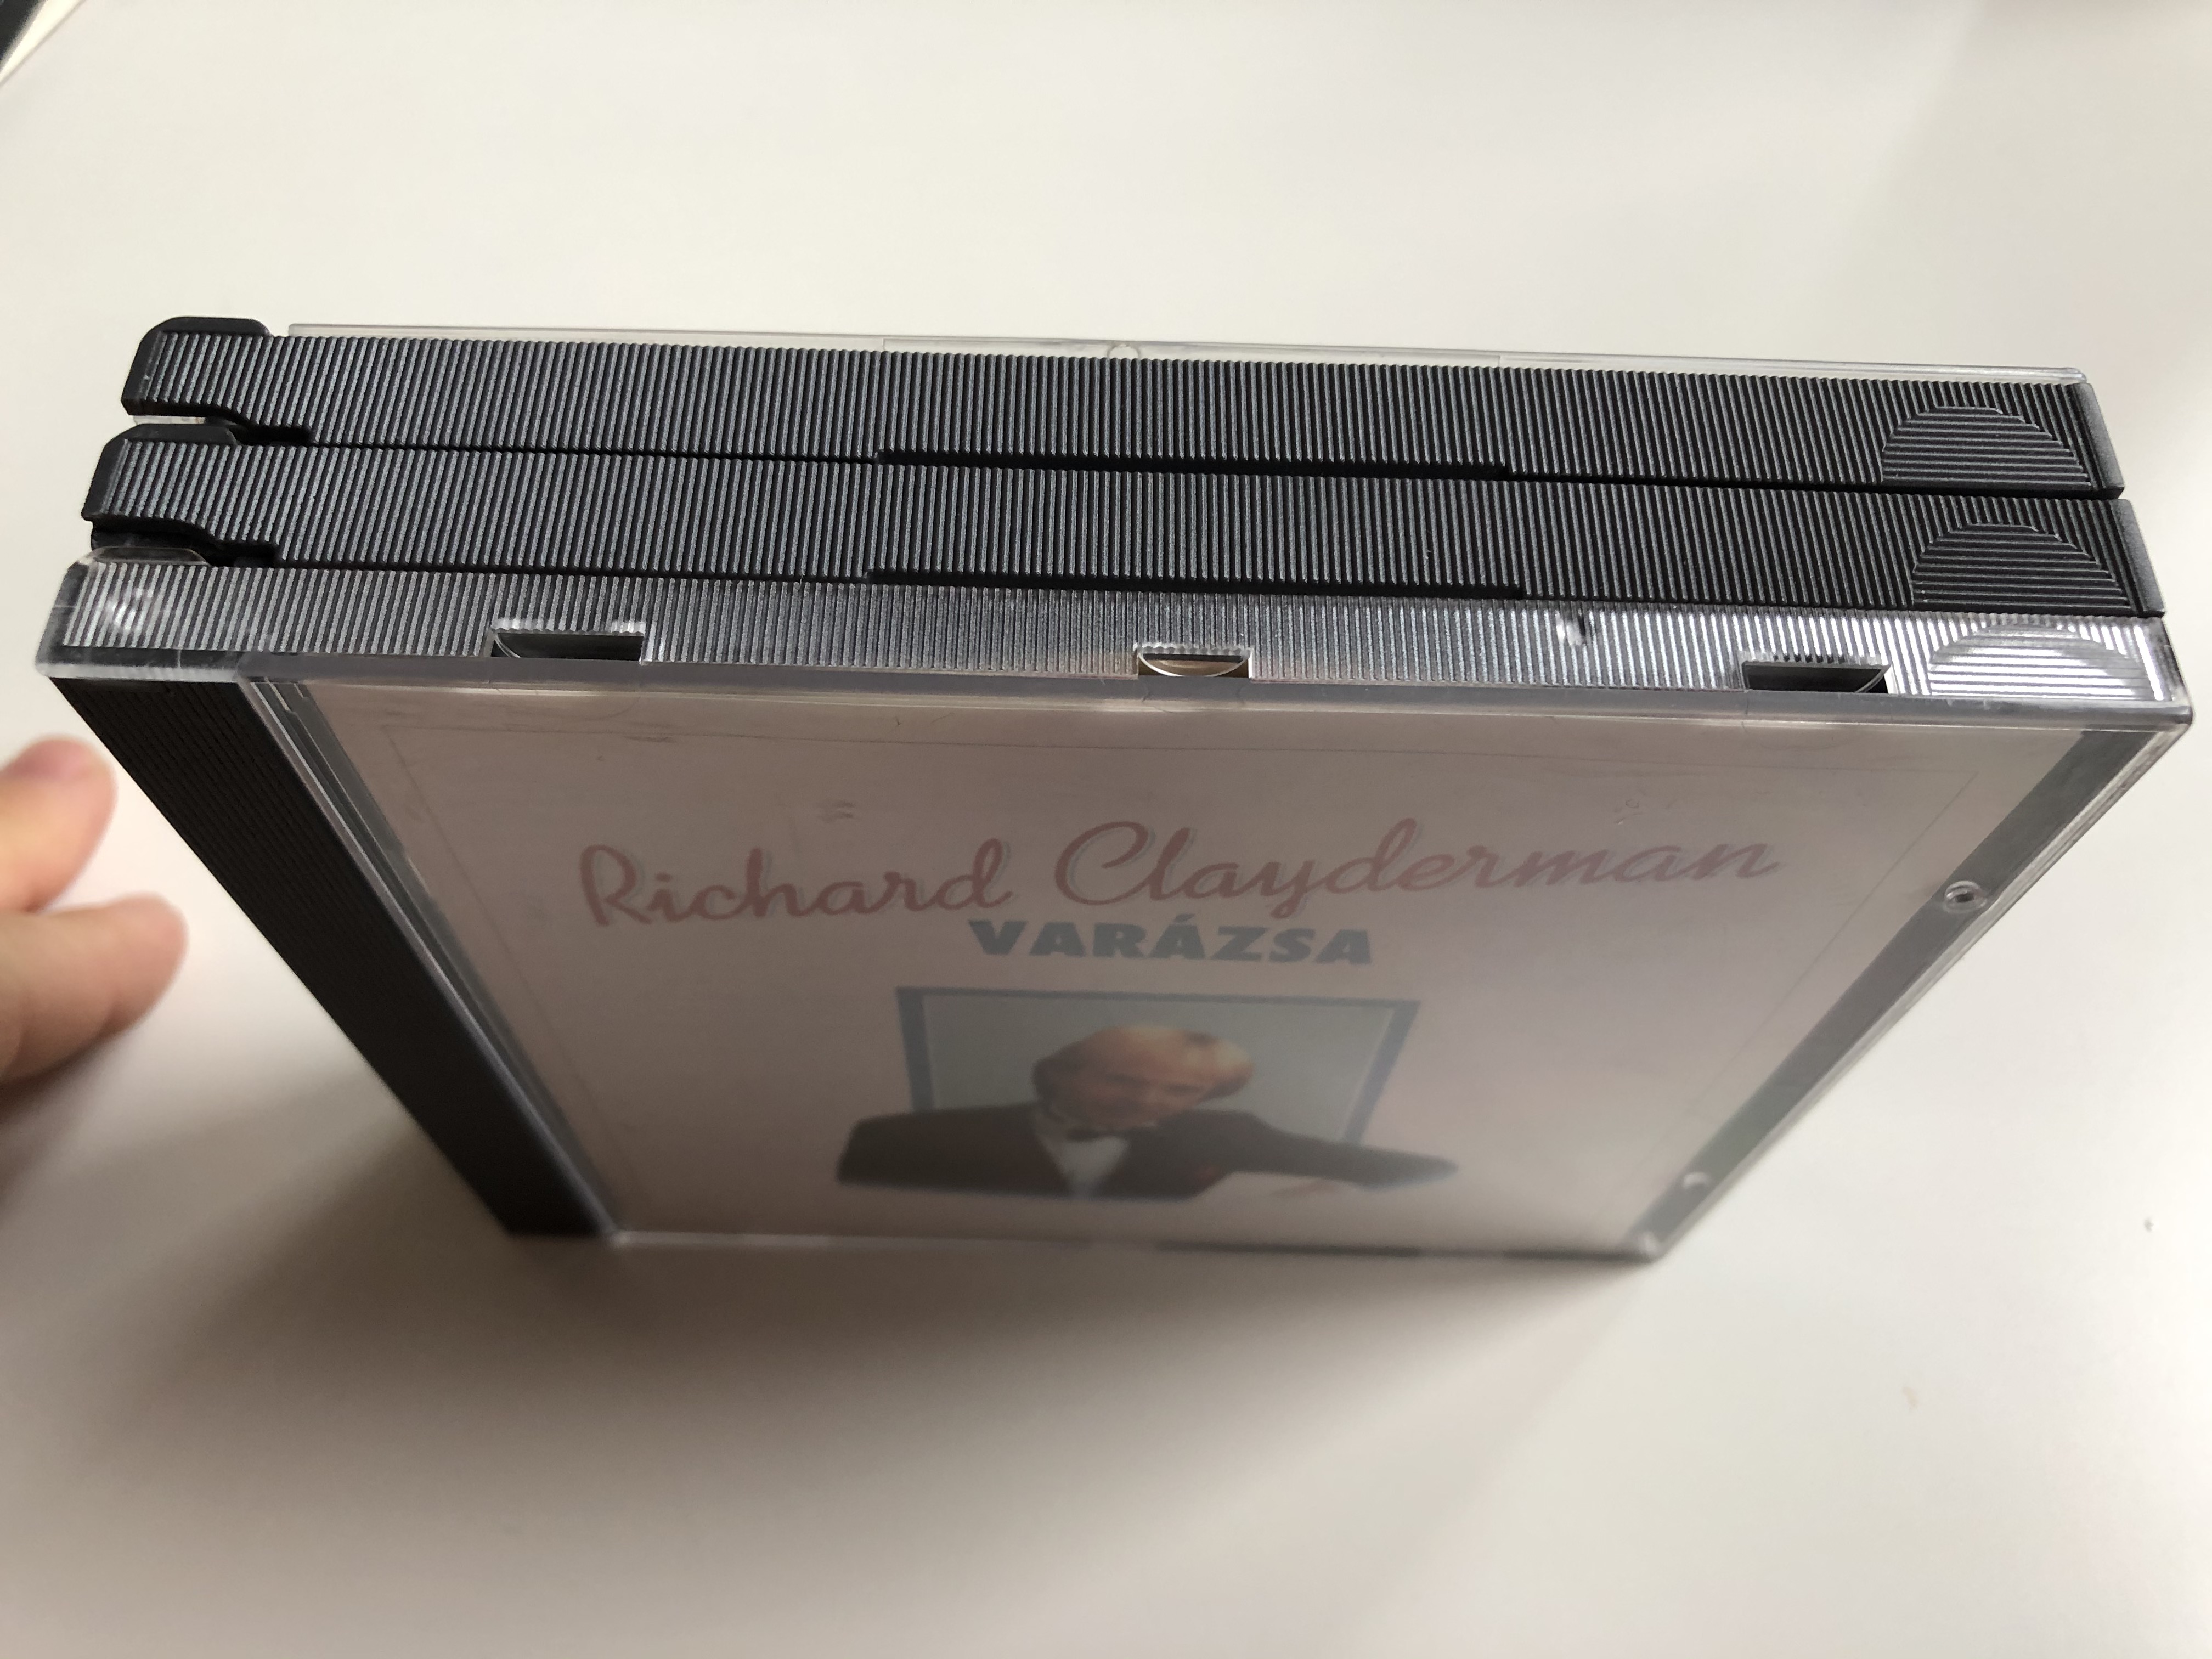 richard-clayderman-var-zsa-reader-s-digest-5x-audio-cd-1995-rdcd9501-05-17-.jpg